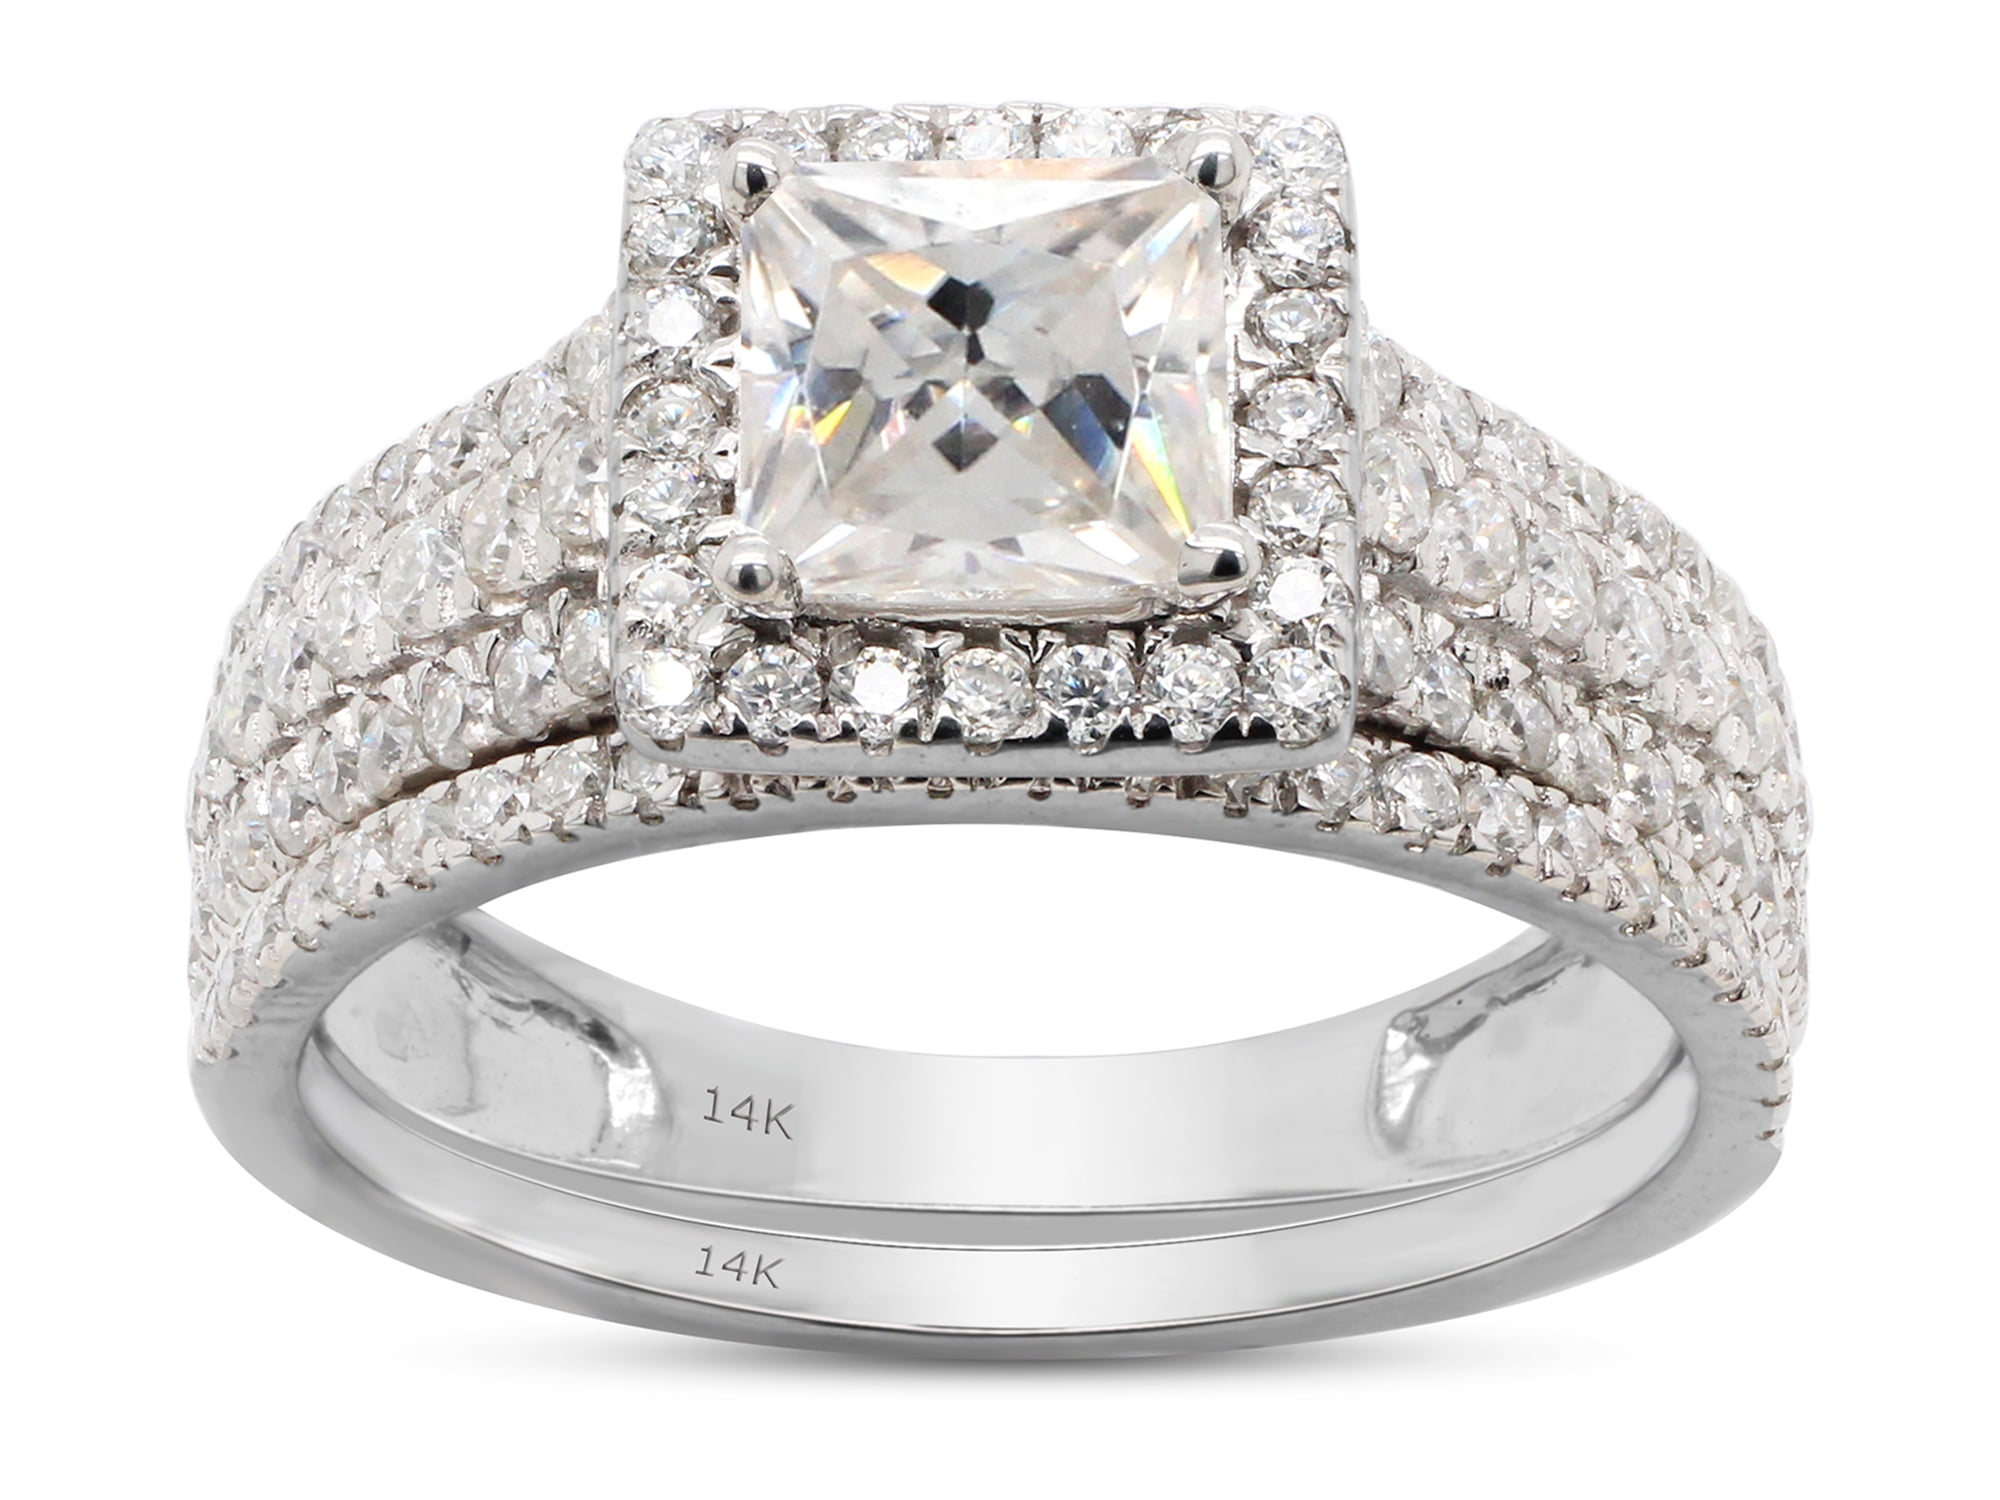 2.75 carat oval cut d vvs1 diamond engagement wedding ring 14k white gold over 